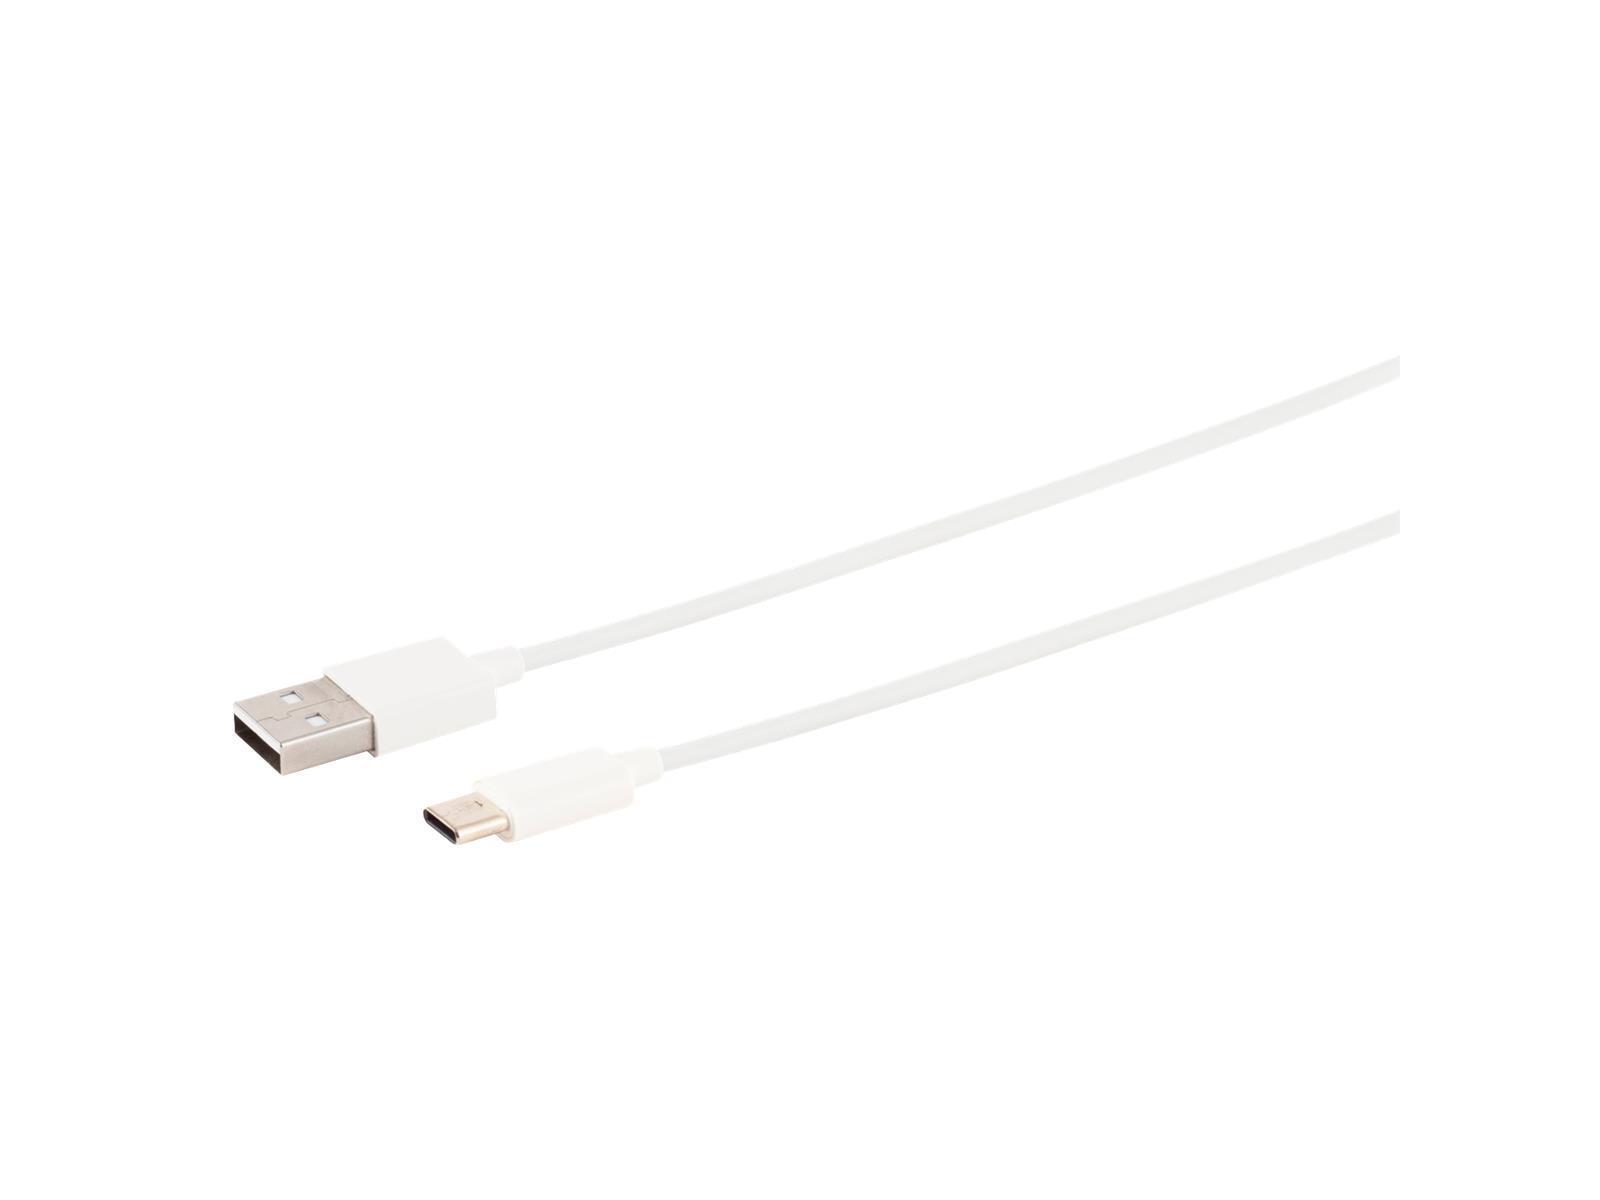 USB Lade-Sync Kabel, USB-A Stecker auf USB C-Stecker, 2.0, ABS, weiß, 0,5m